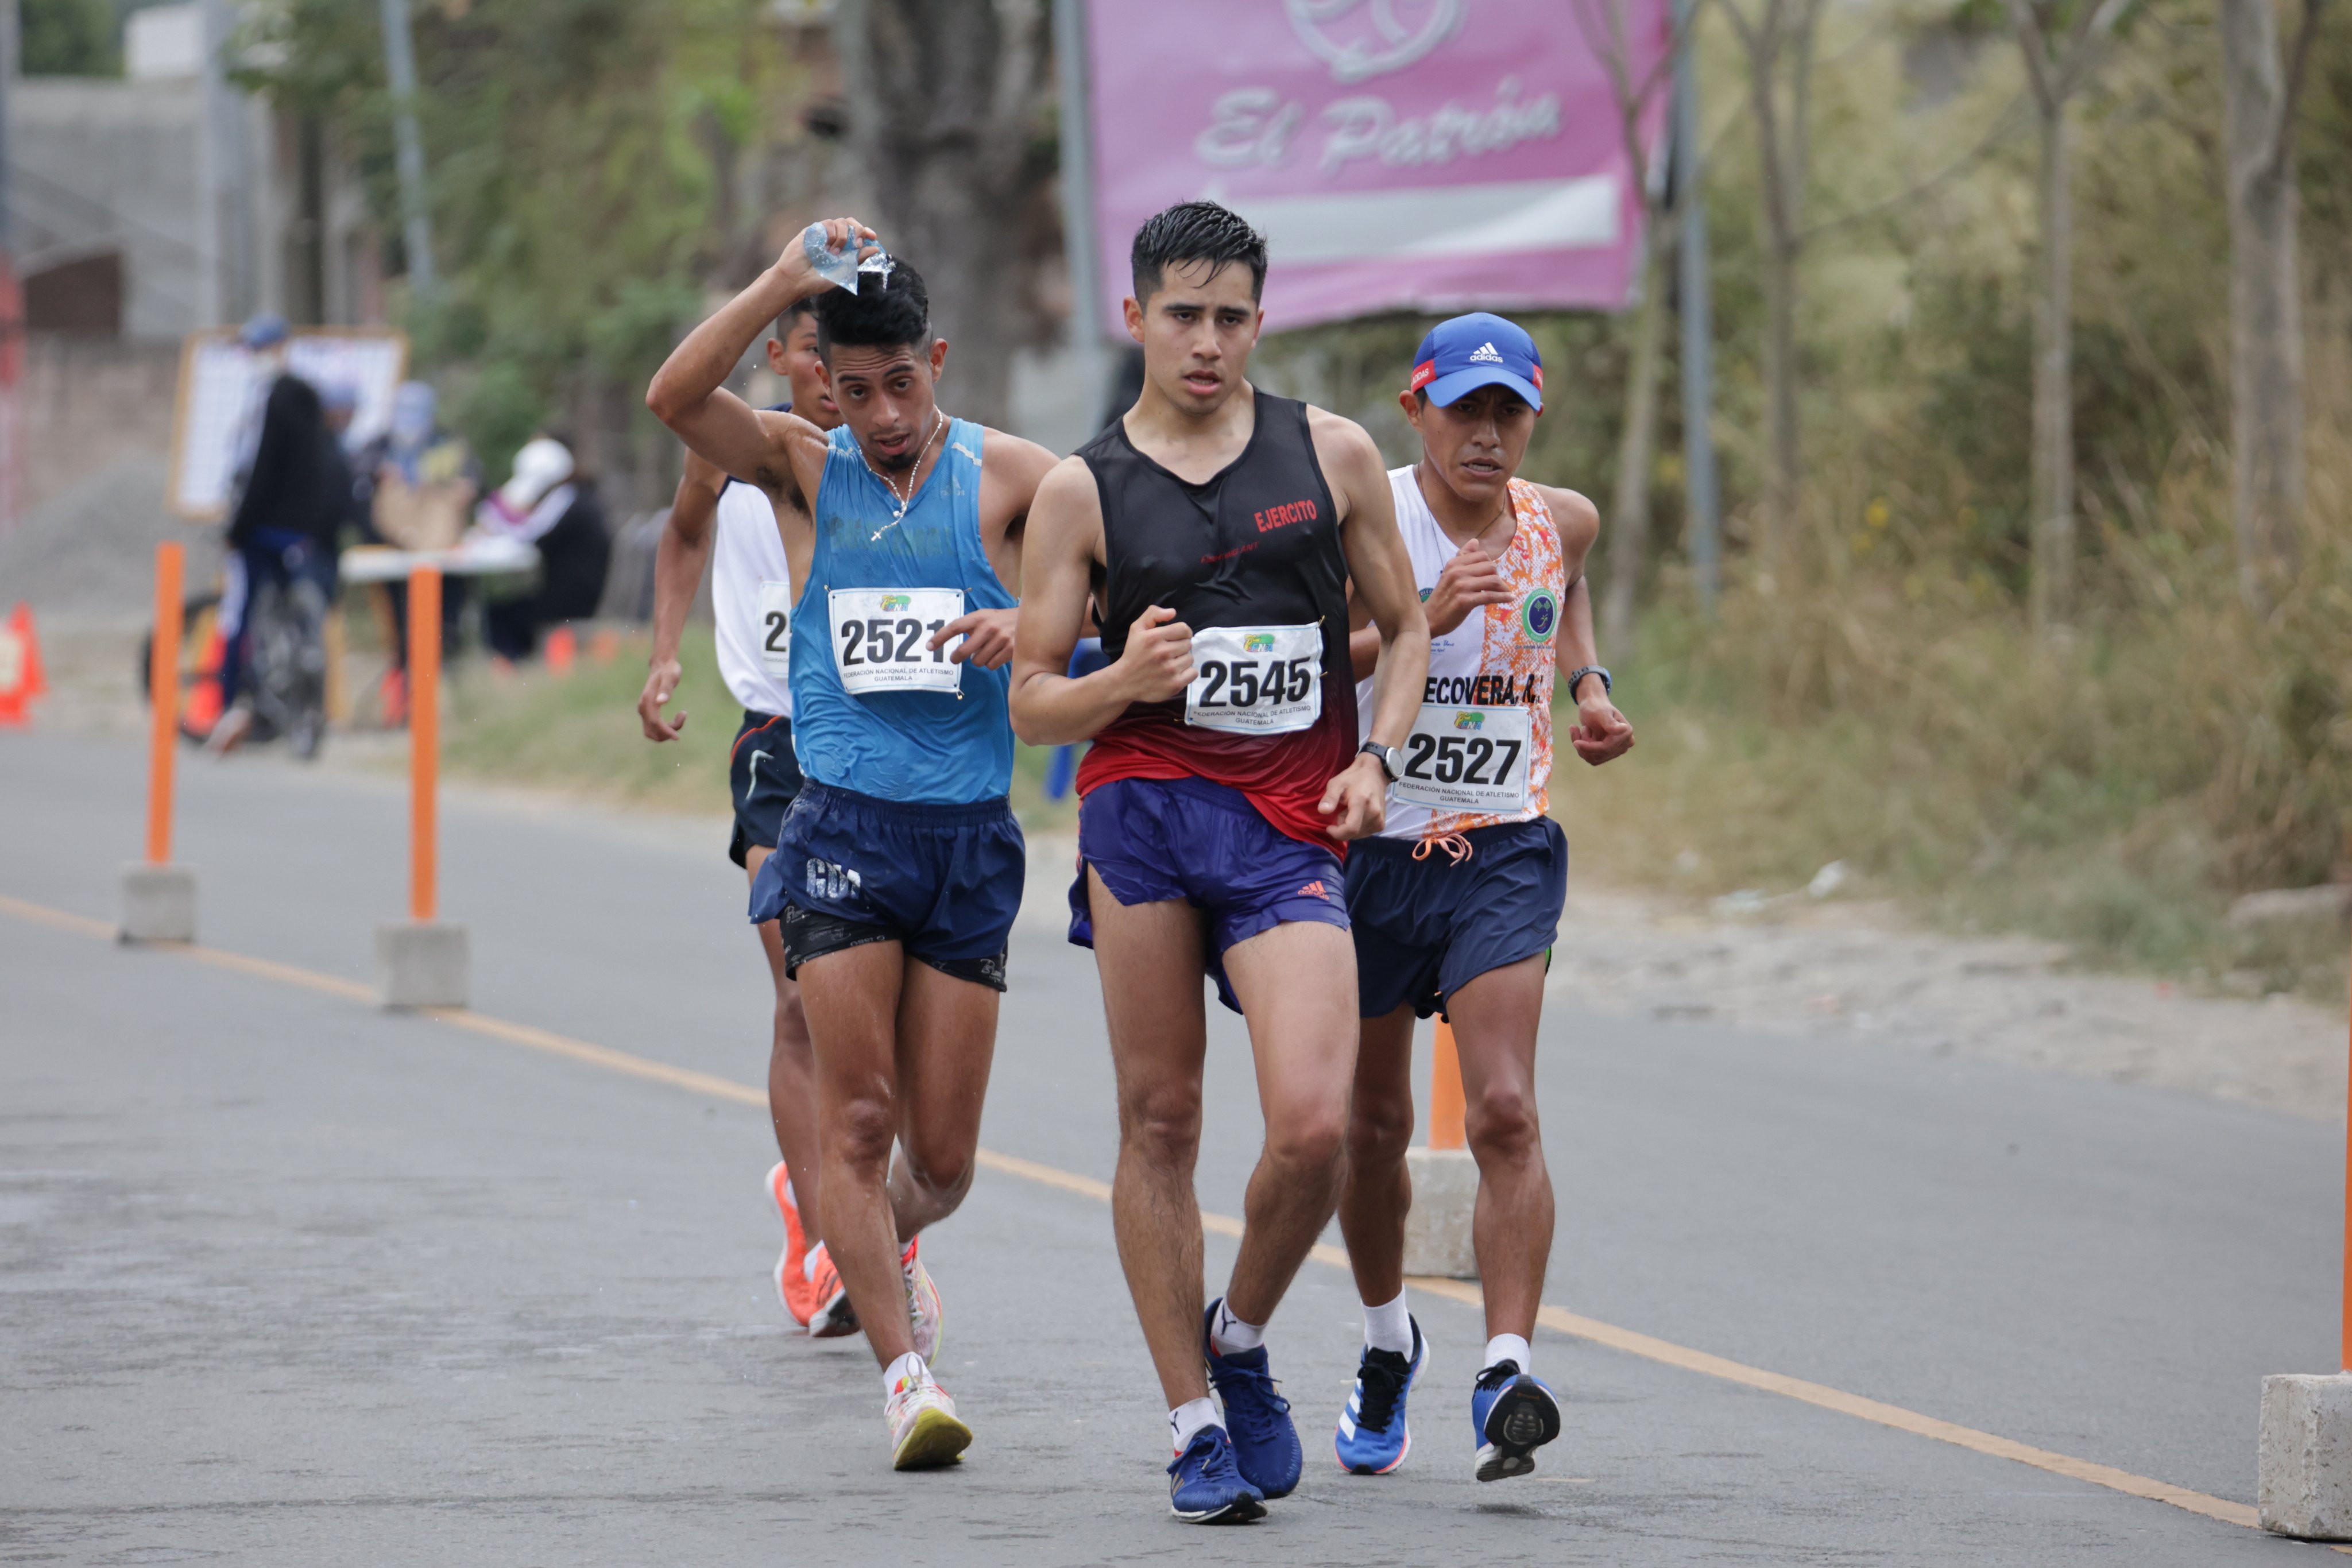 Los atletas Jefferson Segura, Sergio Sacul y Erwin Morales finalizando la prueba de 35 kilómetros. (Foto Prensa Libre: Twitter)